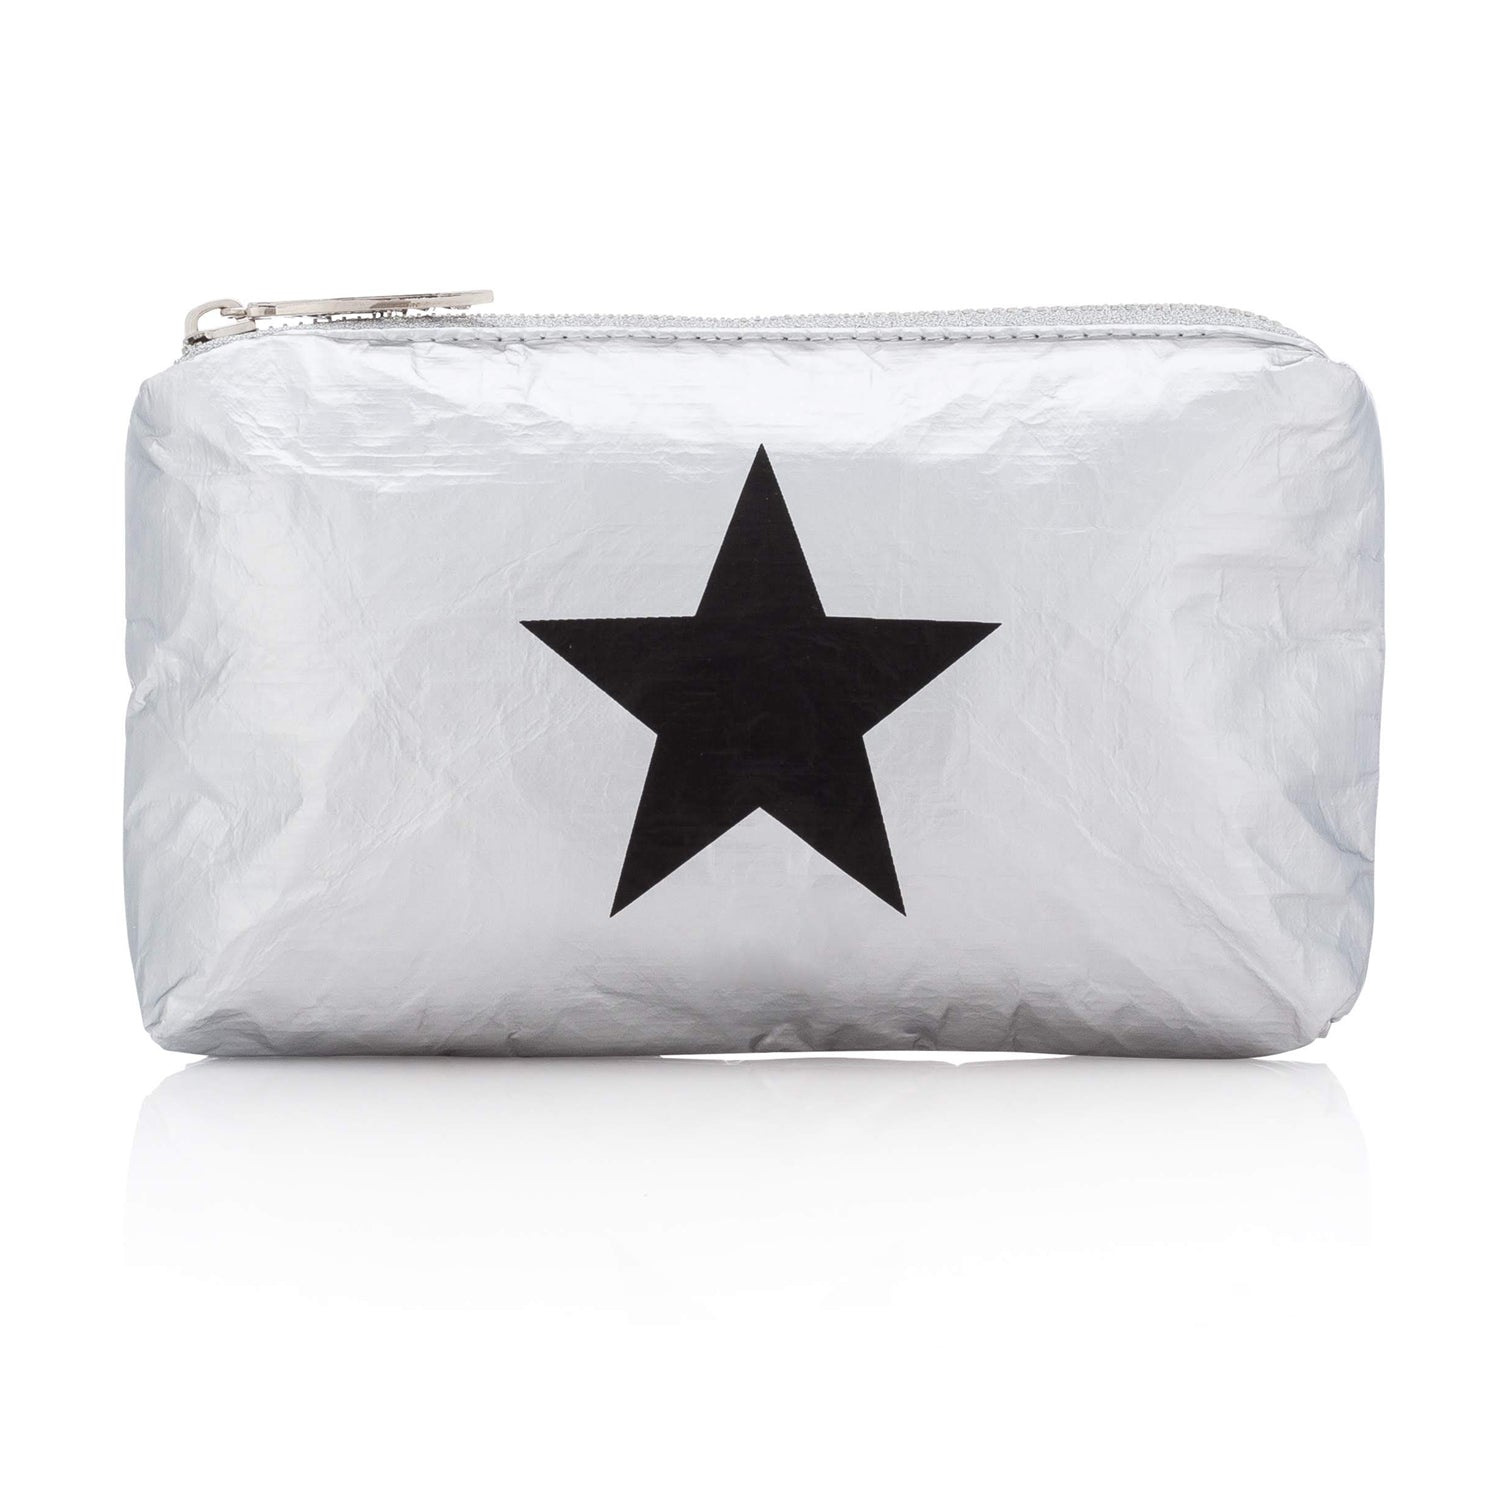 Hi Love Cute Mini Padded Pack - Small Makeup Bag - Metallic Silver with Black Star